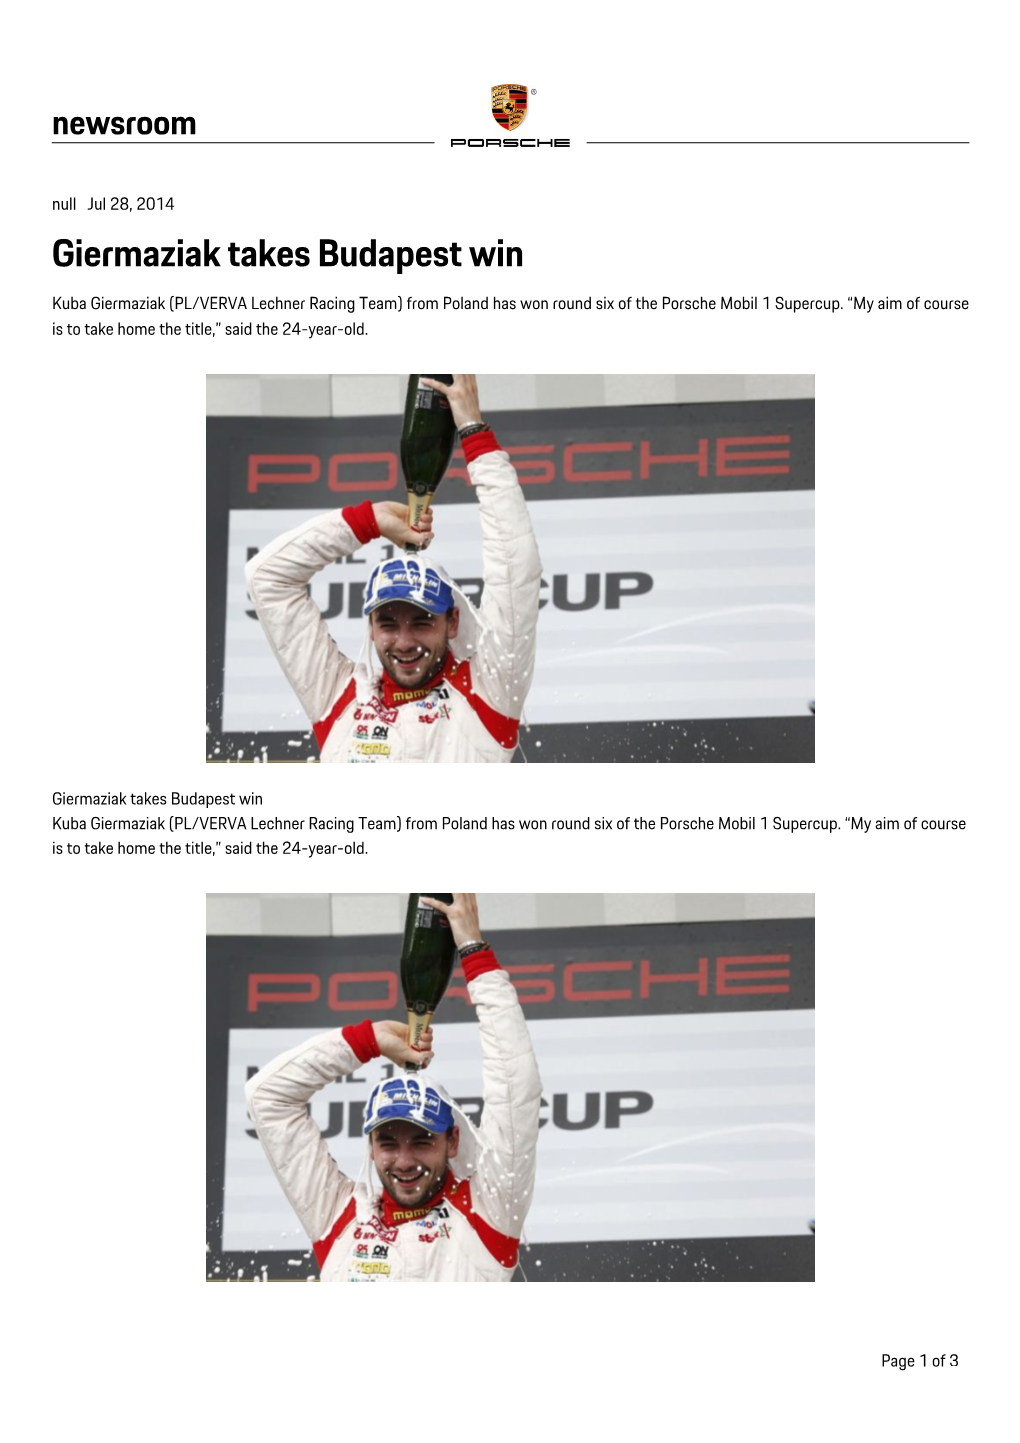 Giermaziak Takes Budapest Win Kuba Giermaziak (PL/VERVA Lechner Racing Team) from Poland Has Won Round Six of the Porsche Mobil 1 Supercup